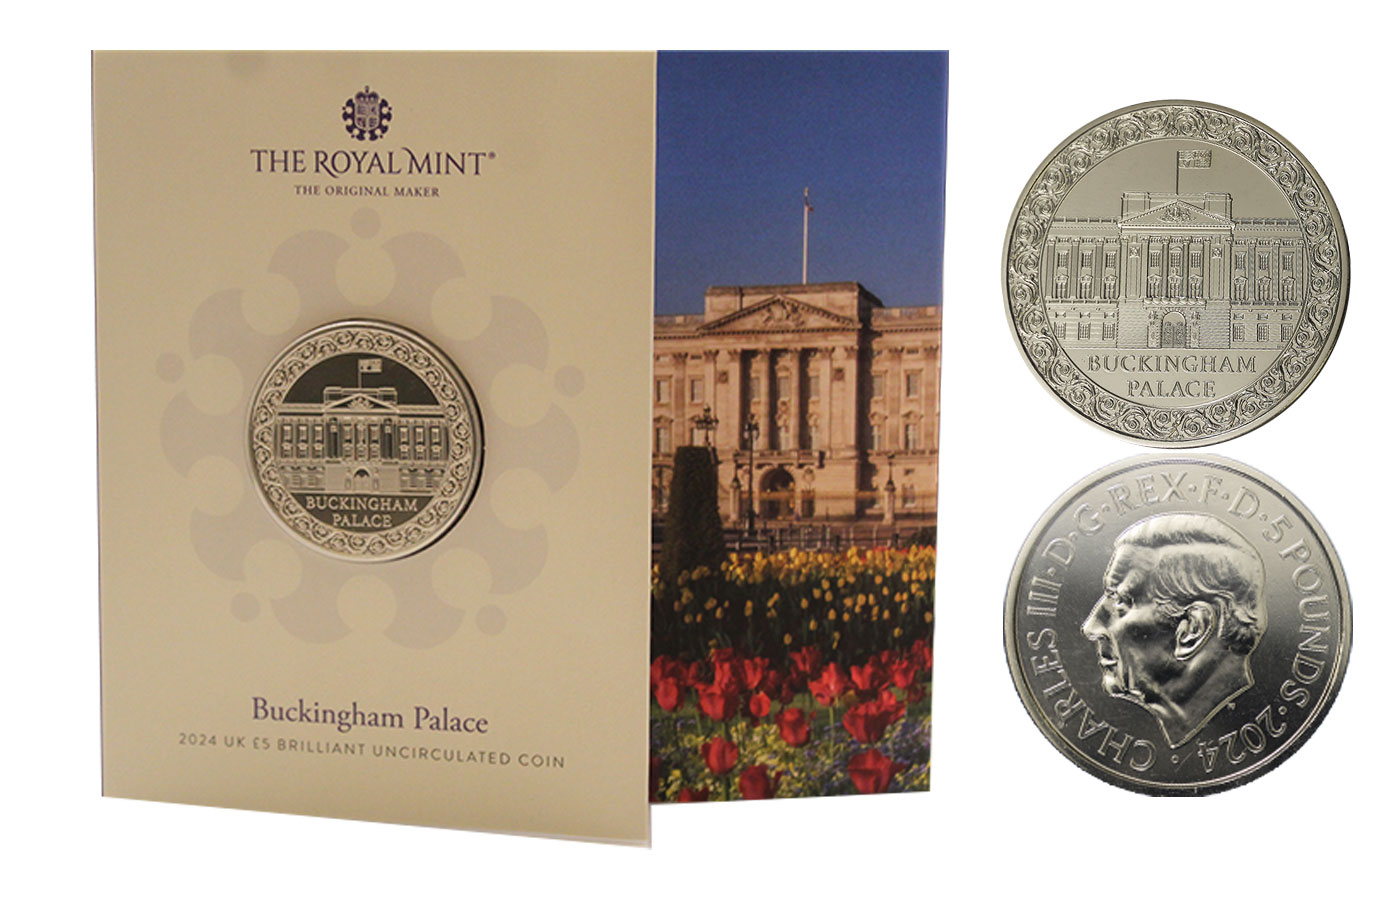 "Buckingham Palace" - Re Carlo III - 5 Pounds - In folder